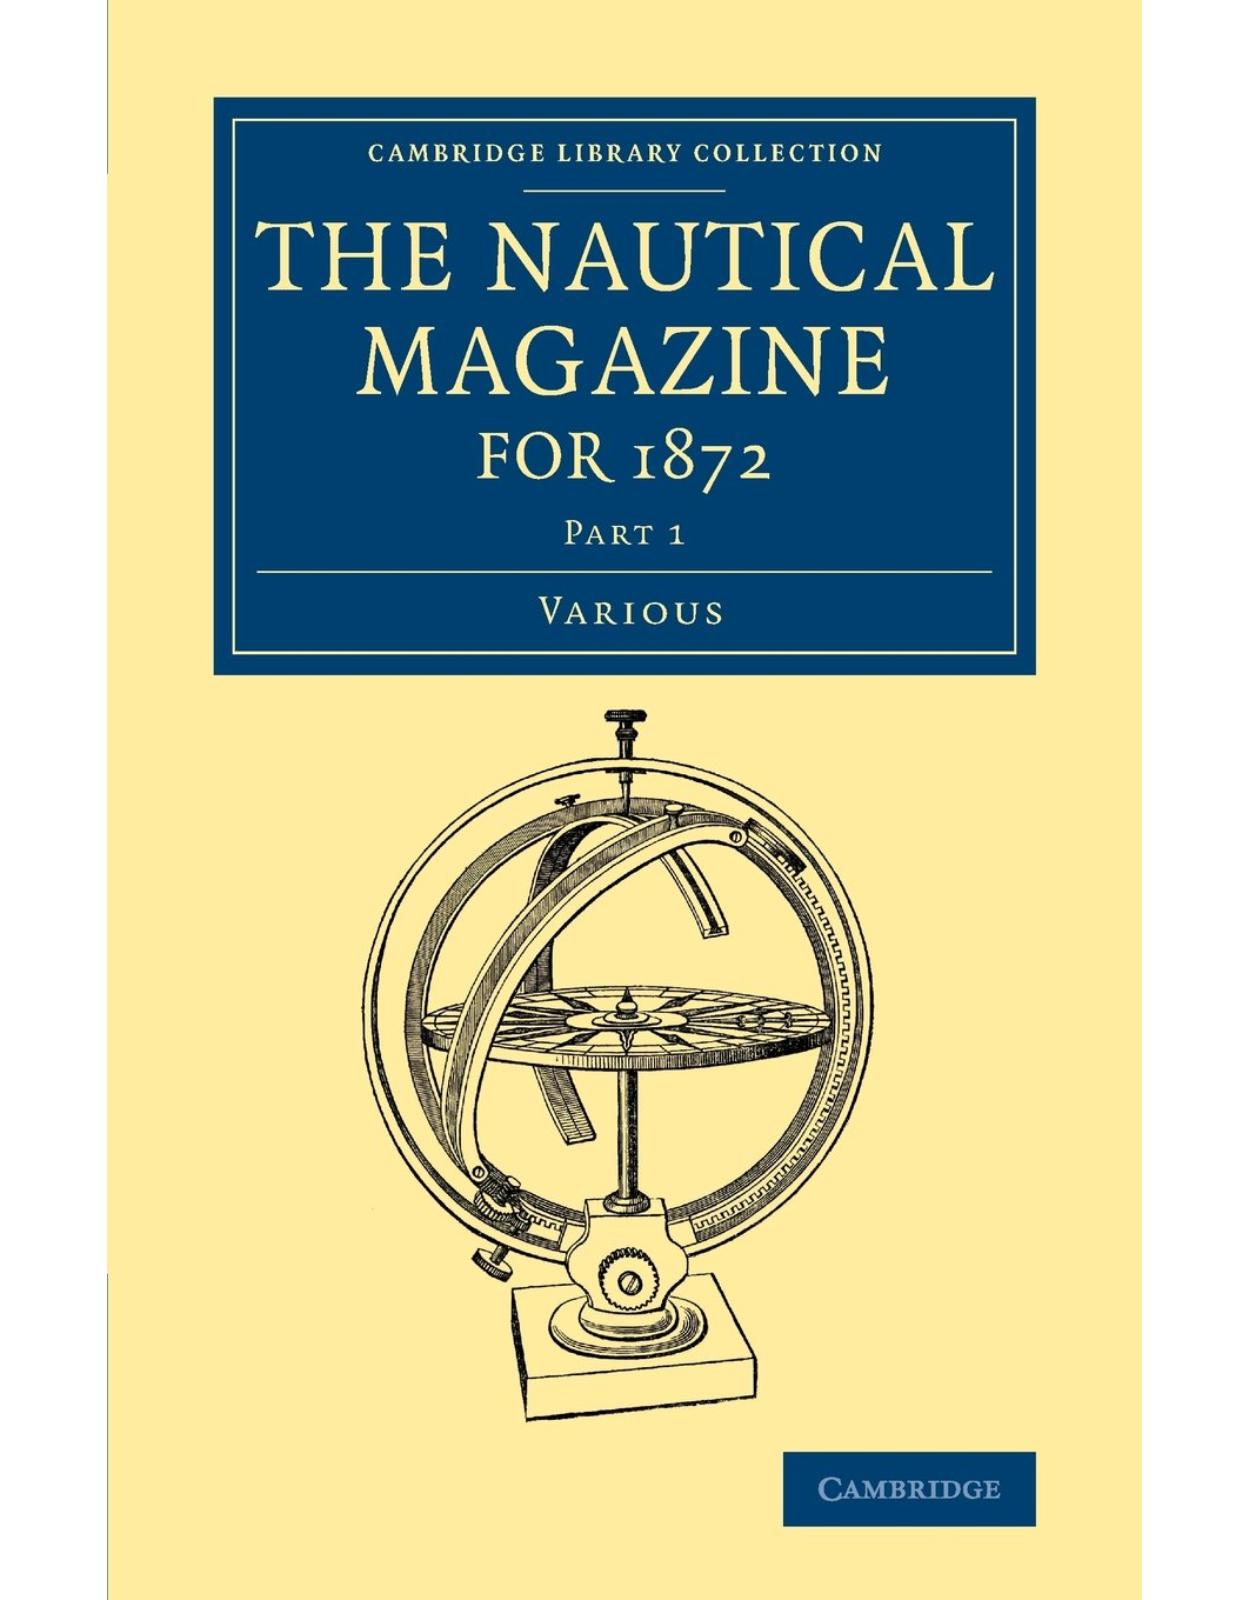 The Nautical Magazine for 1872, Part 1 (Cambridge Library Collection - The Nautical Magazine)